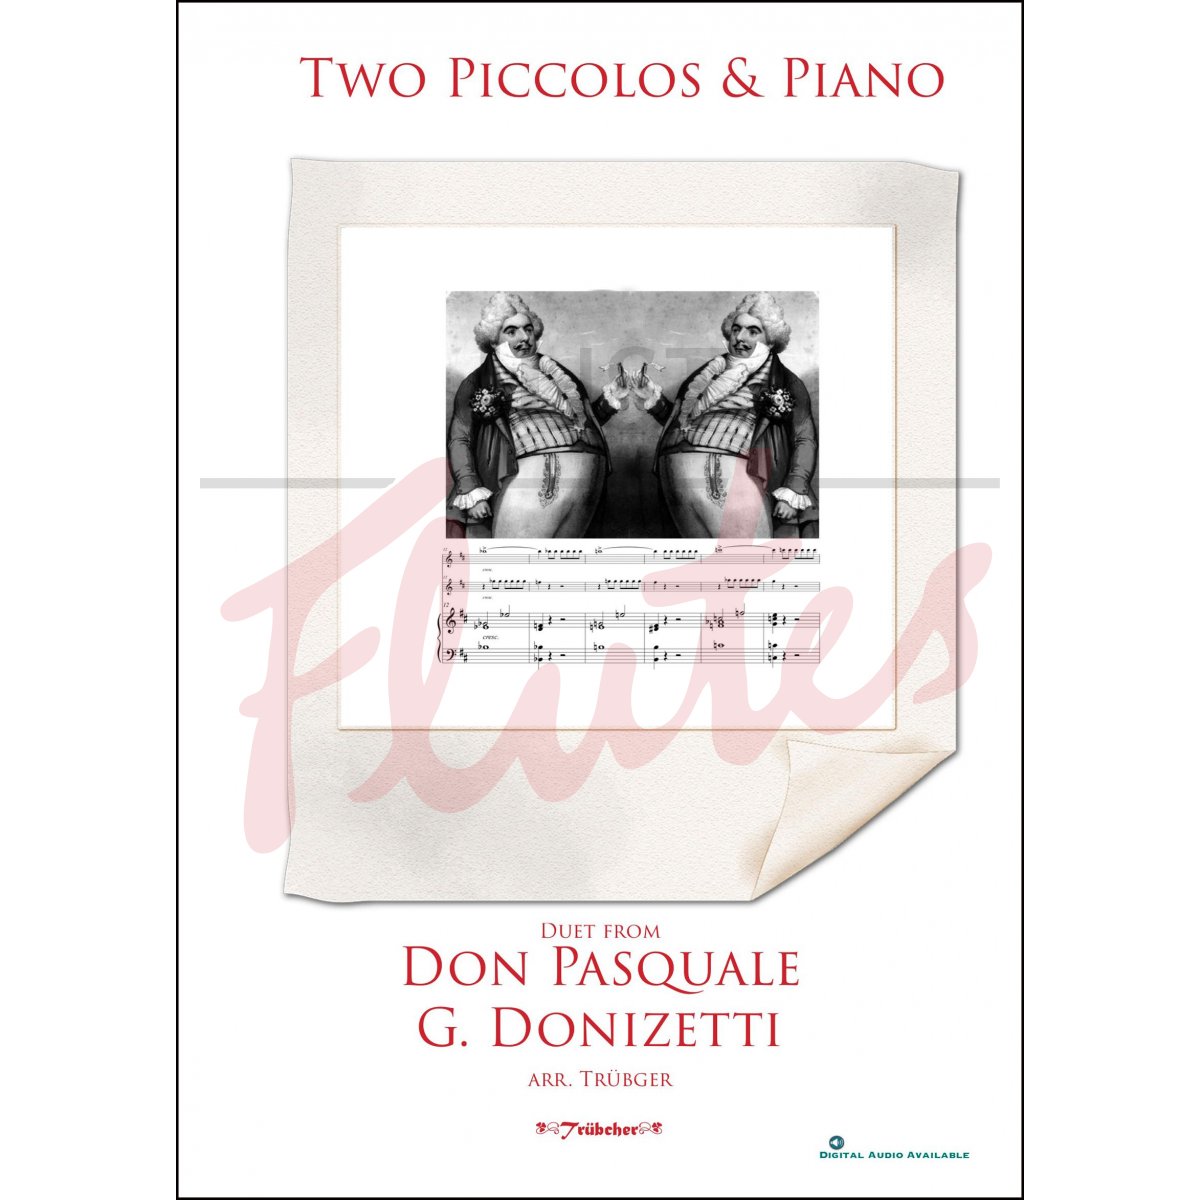 Don Pasquale [2 Piccolos &amp; Piano]